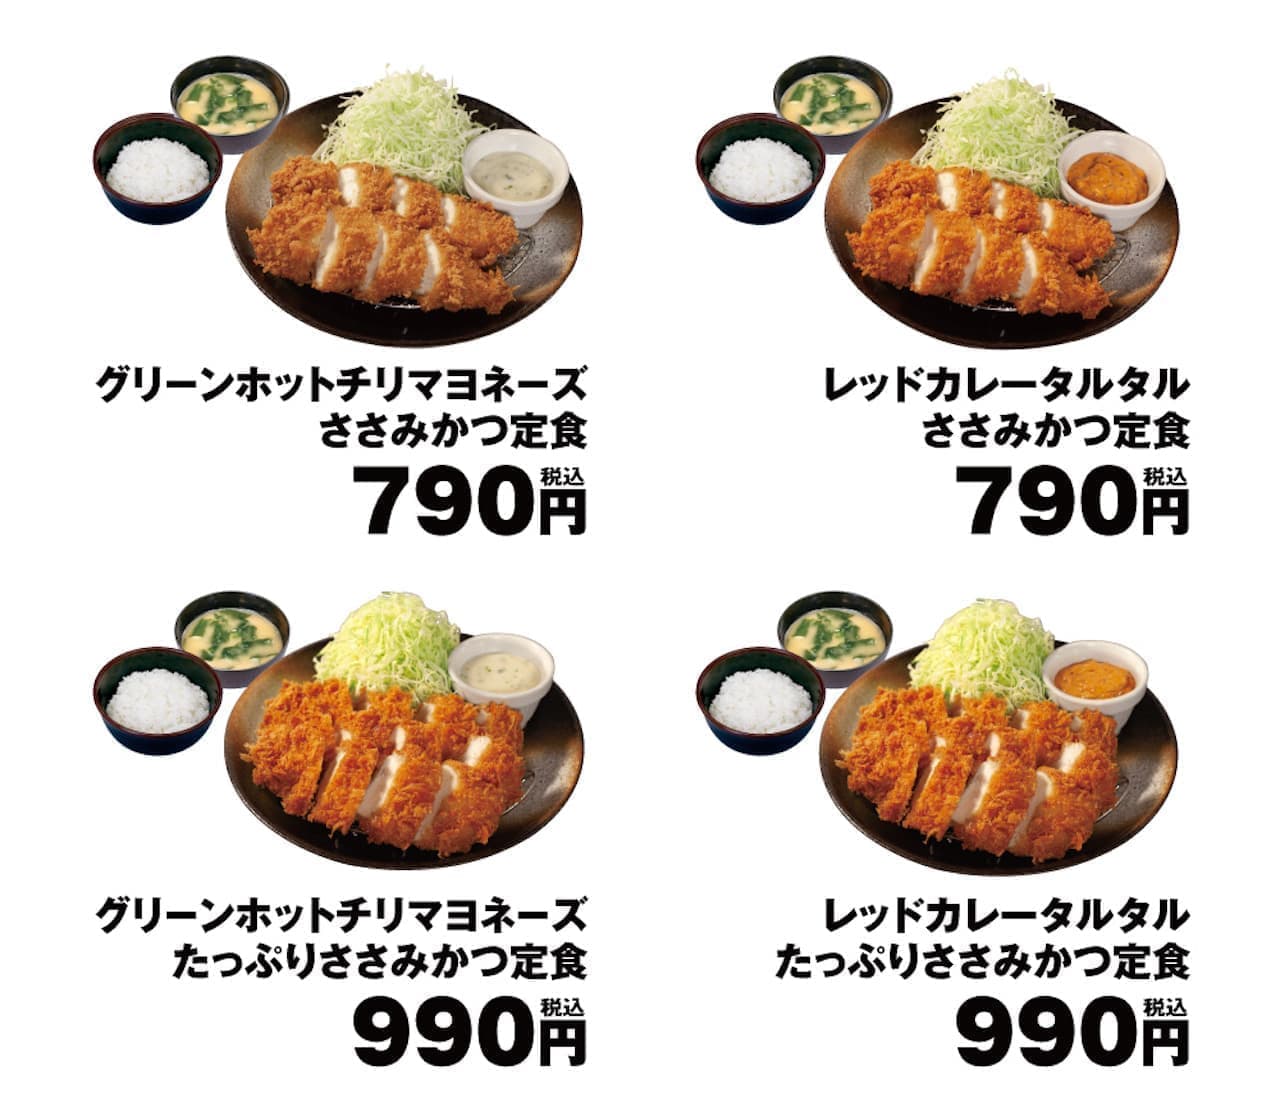  Sasami Katsu" became a standard menu item at Matsunoya.